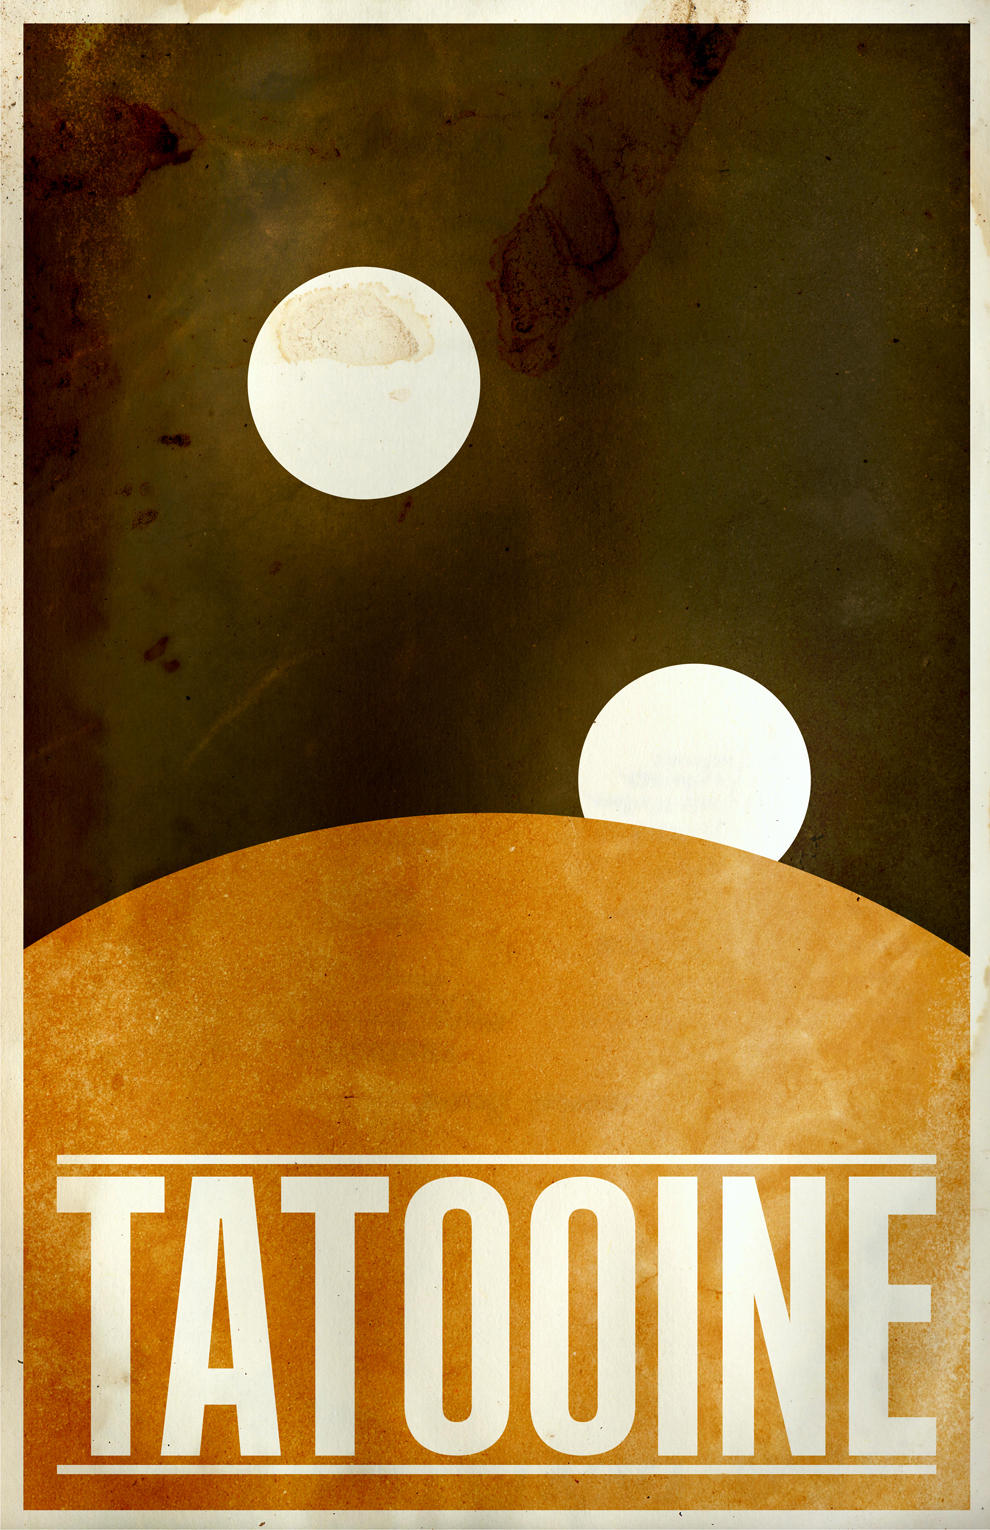 star wars tatooine Hoth degobah Cloud City bespin poster vintage